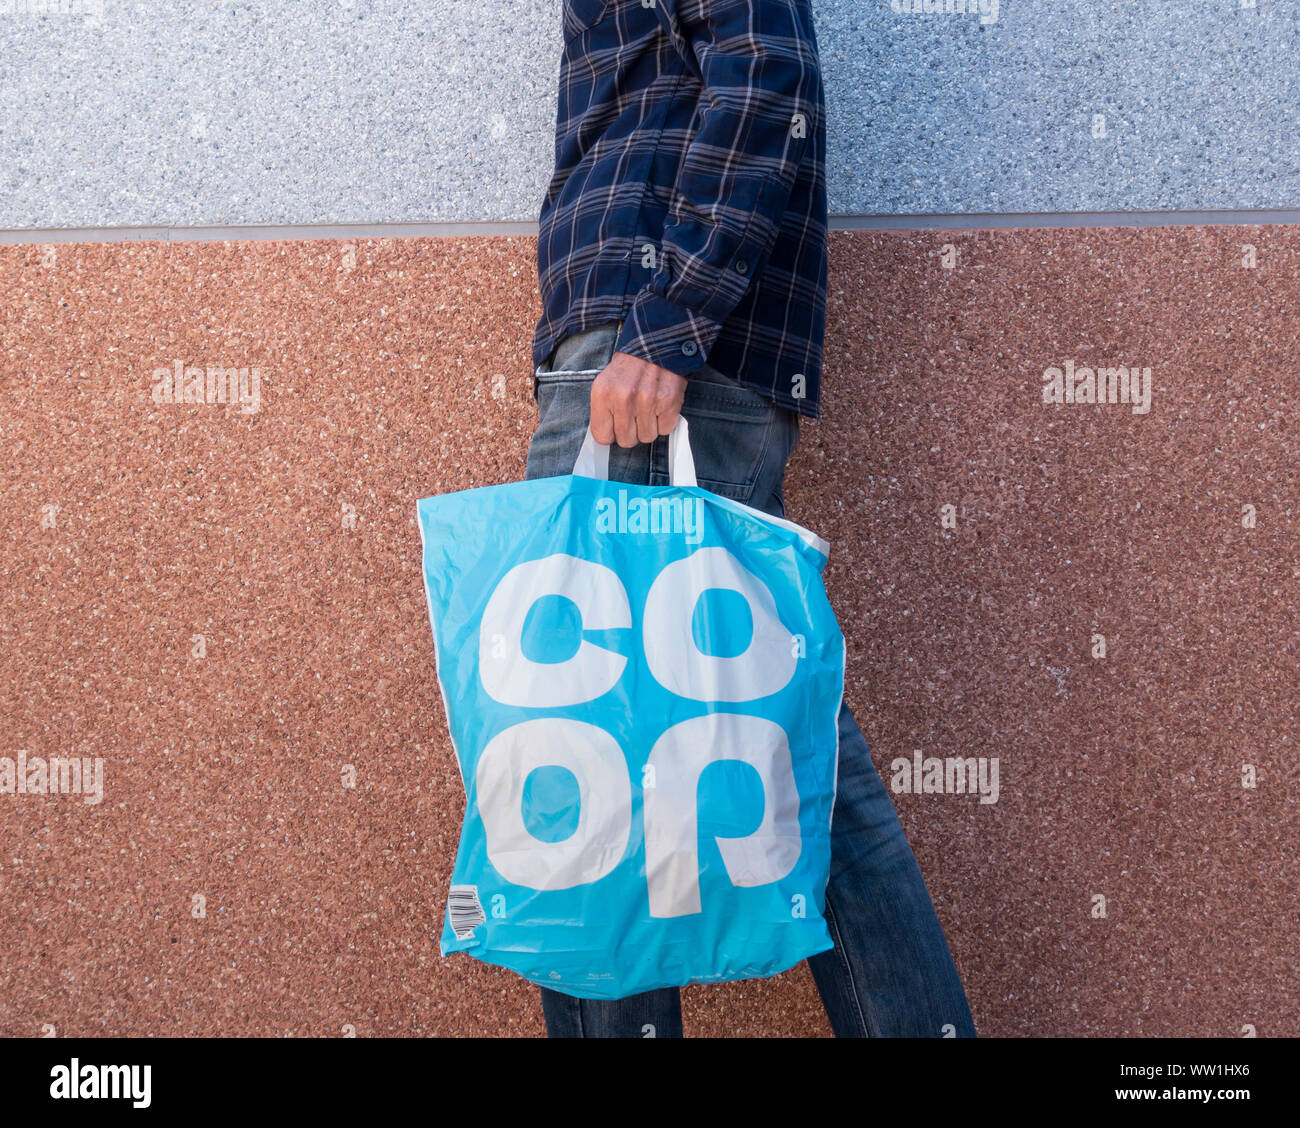 Coop bag -Fotos und -Bildmaterial in hoher Auflösung – Alamy